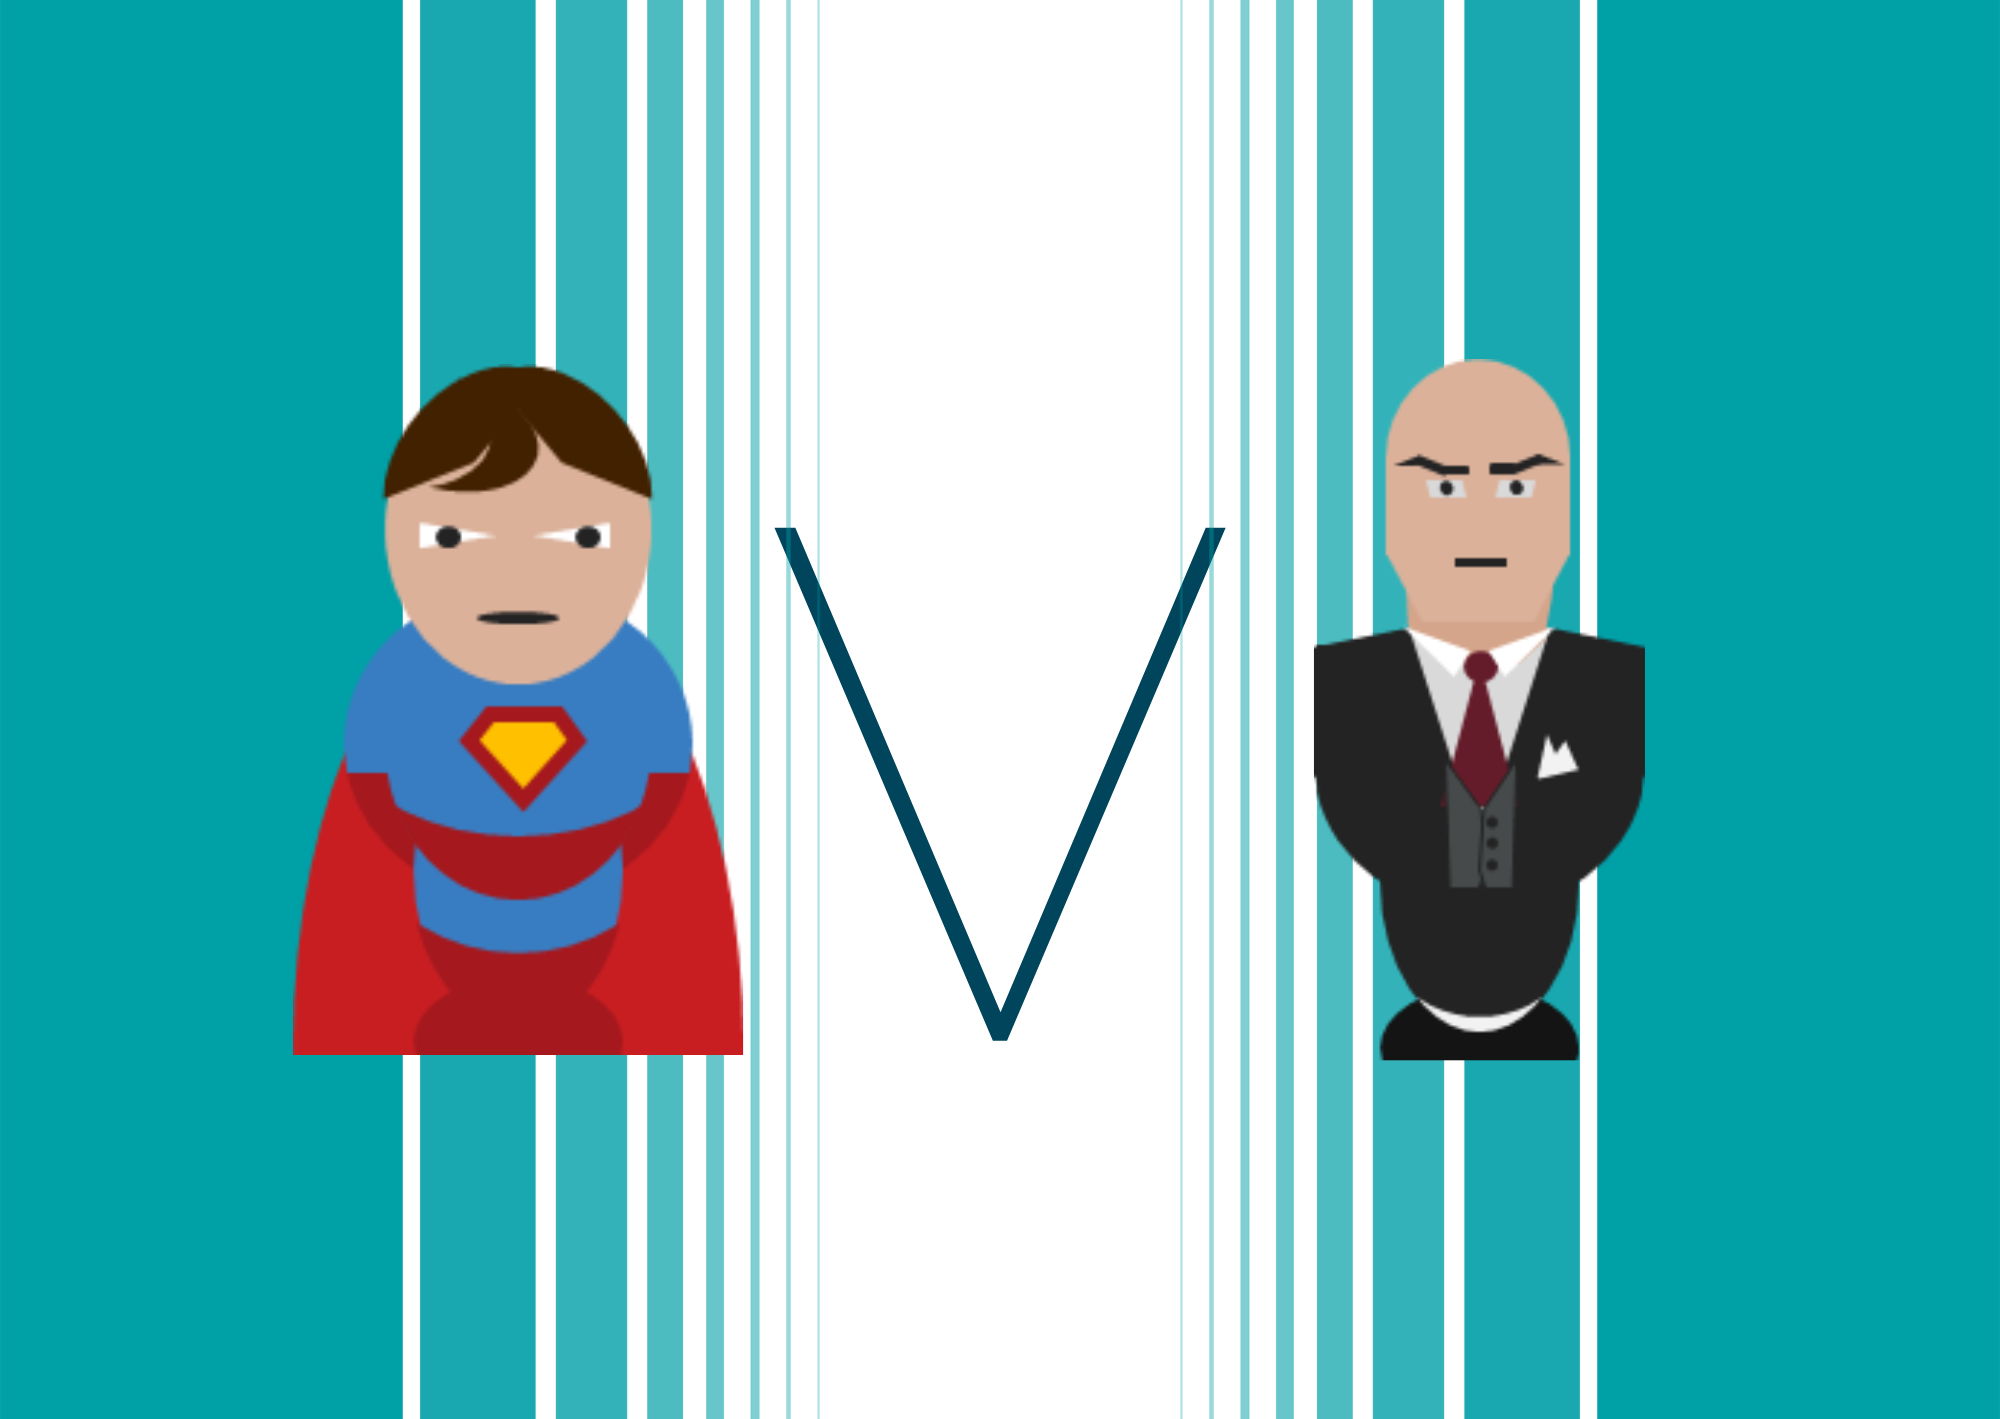 Superman v. Lex Luthor